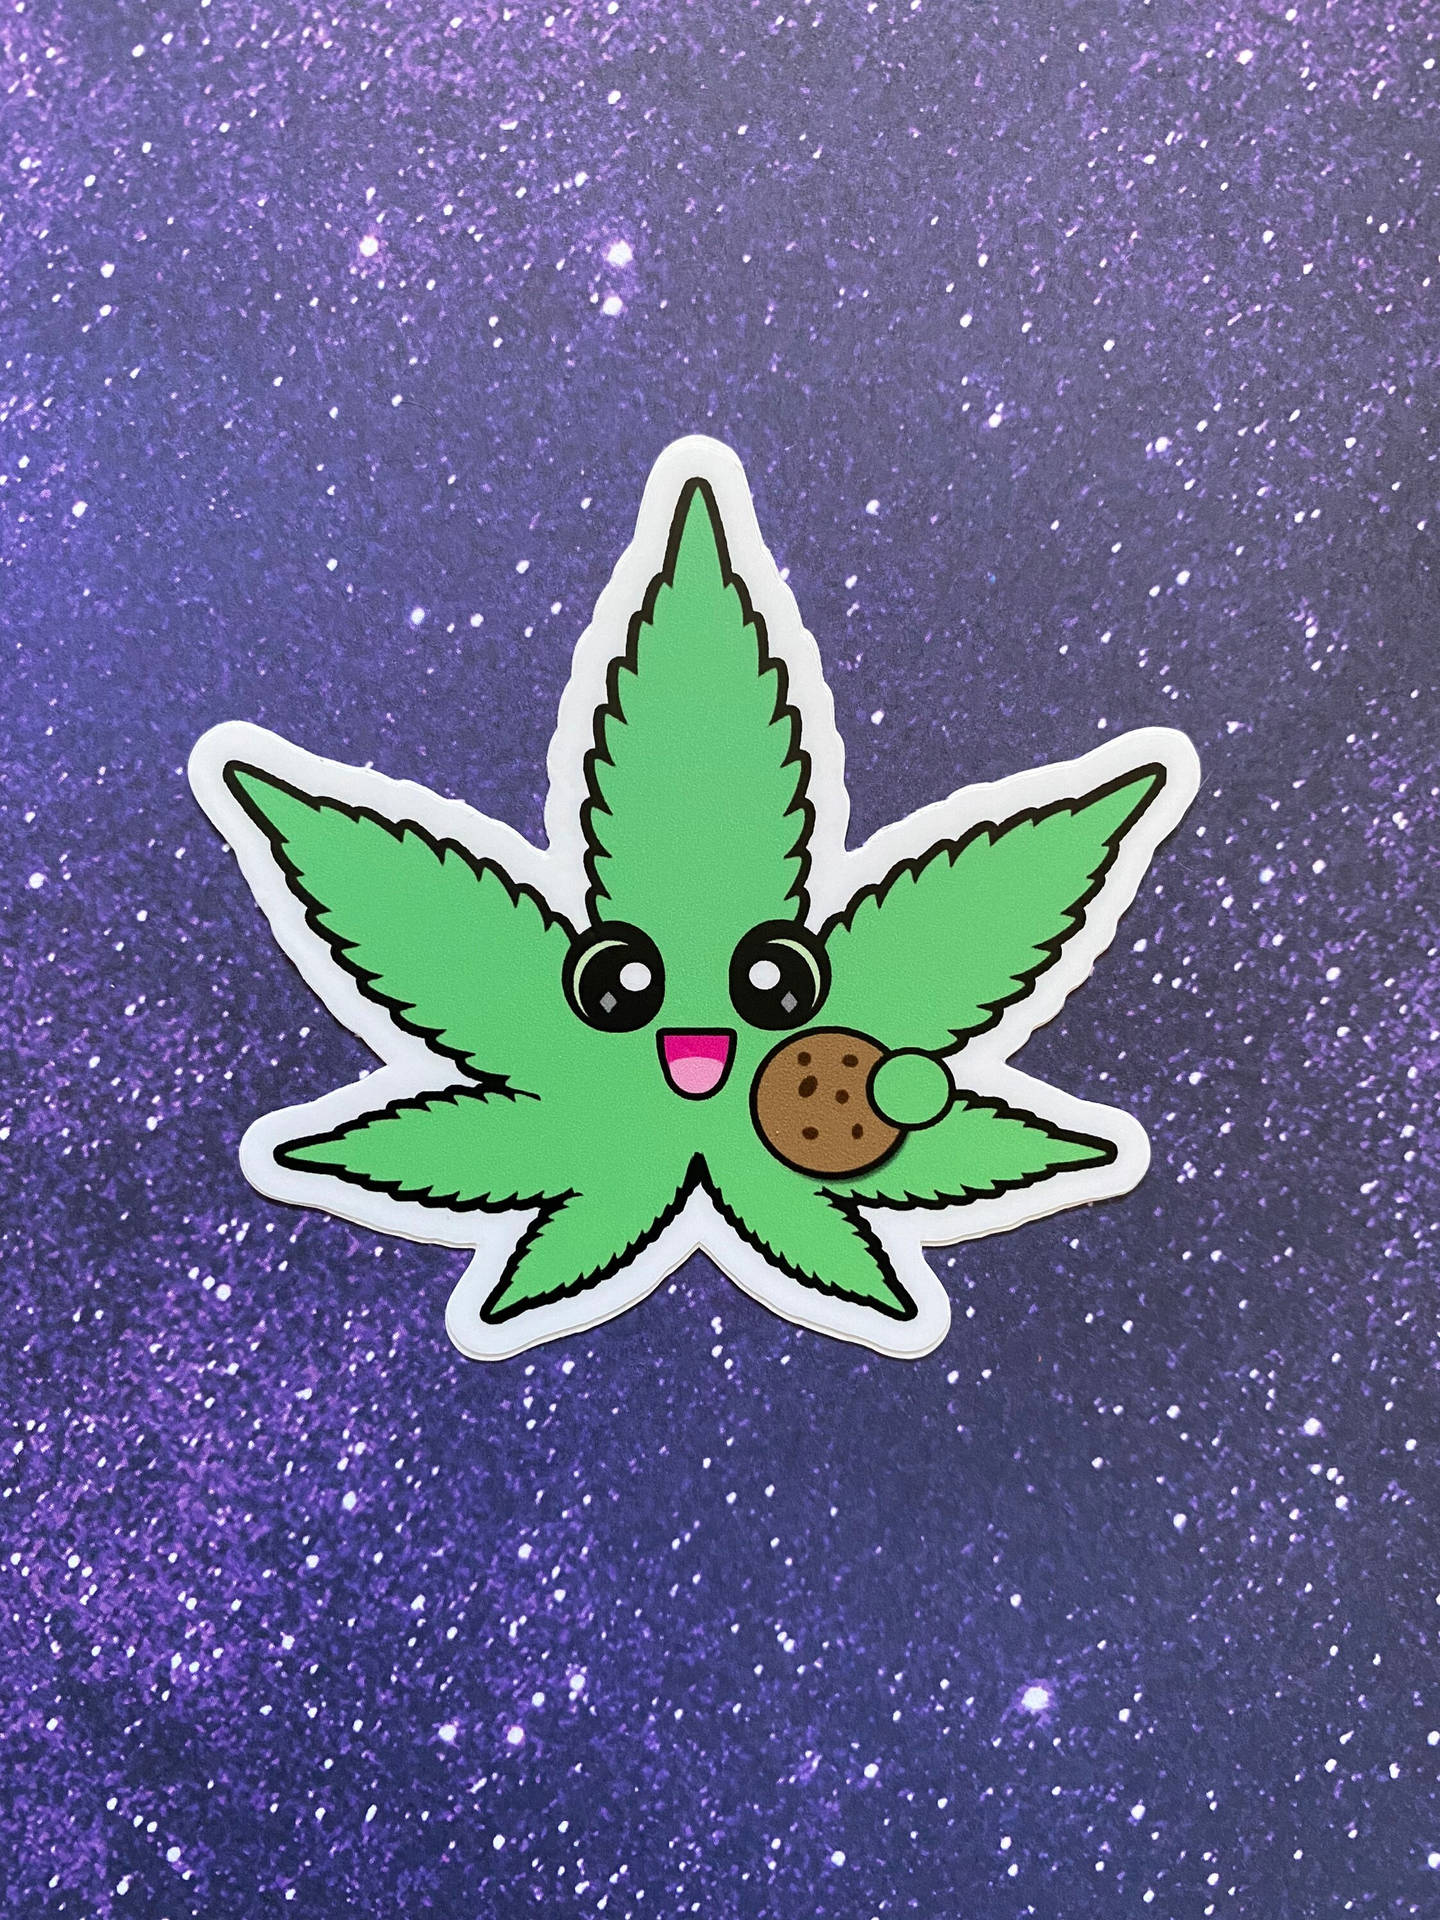 Karikatyrweed (assuming You Mean A Cartoon Image Of Marijuana As A Wallpaper) Wallpaper